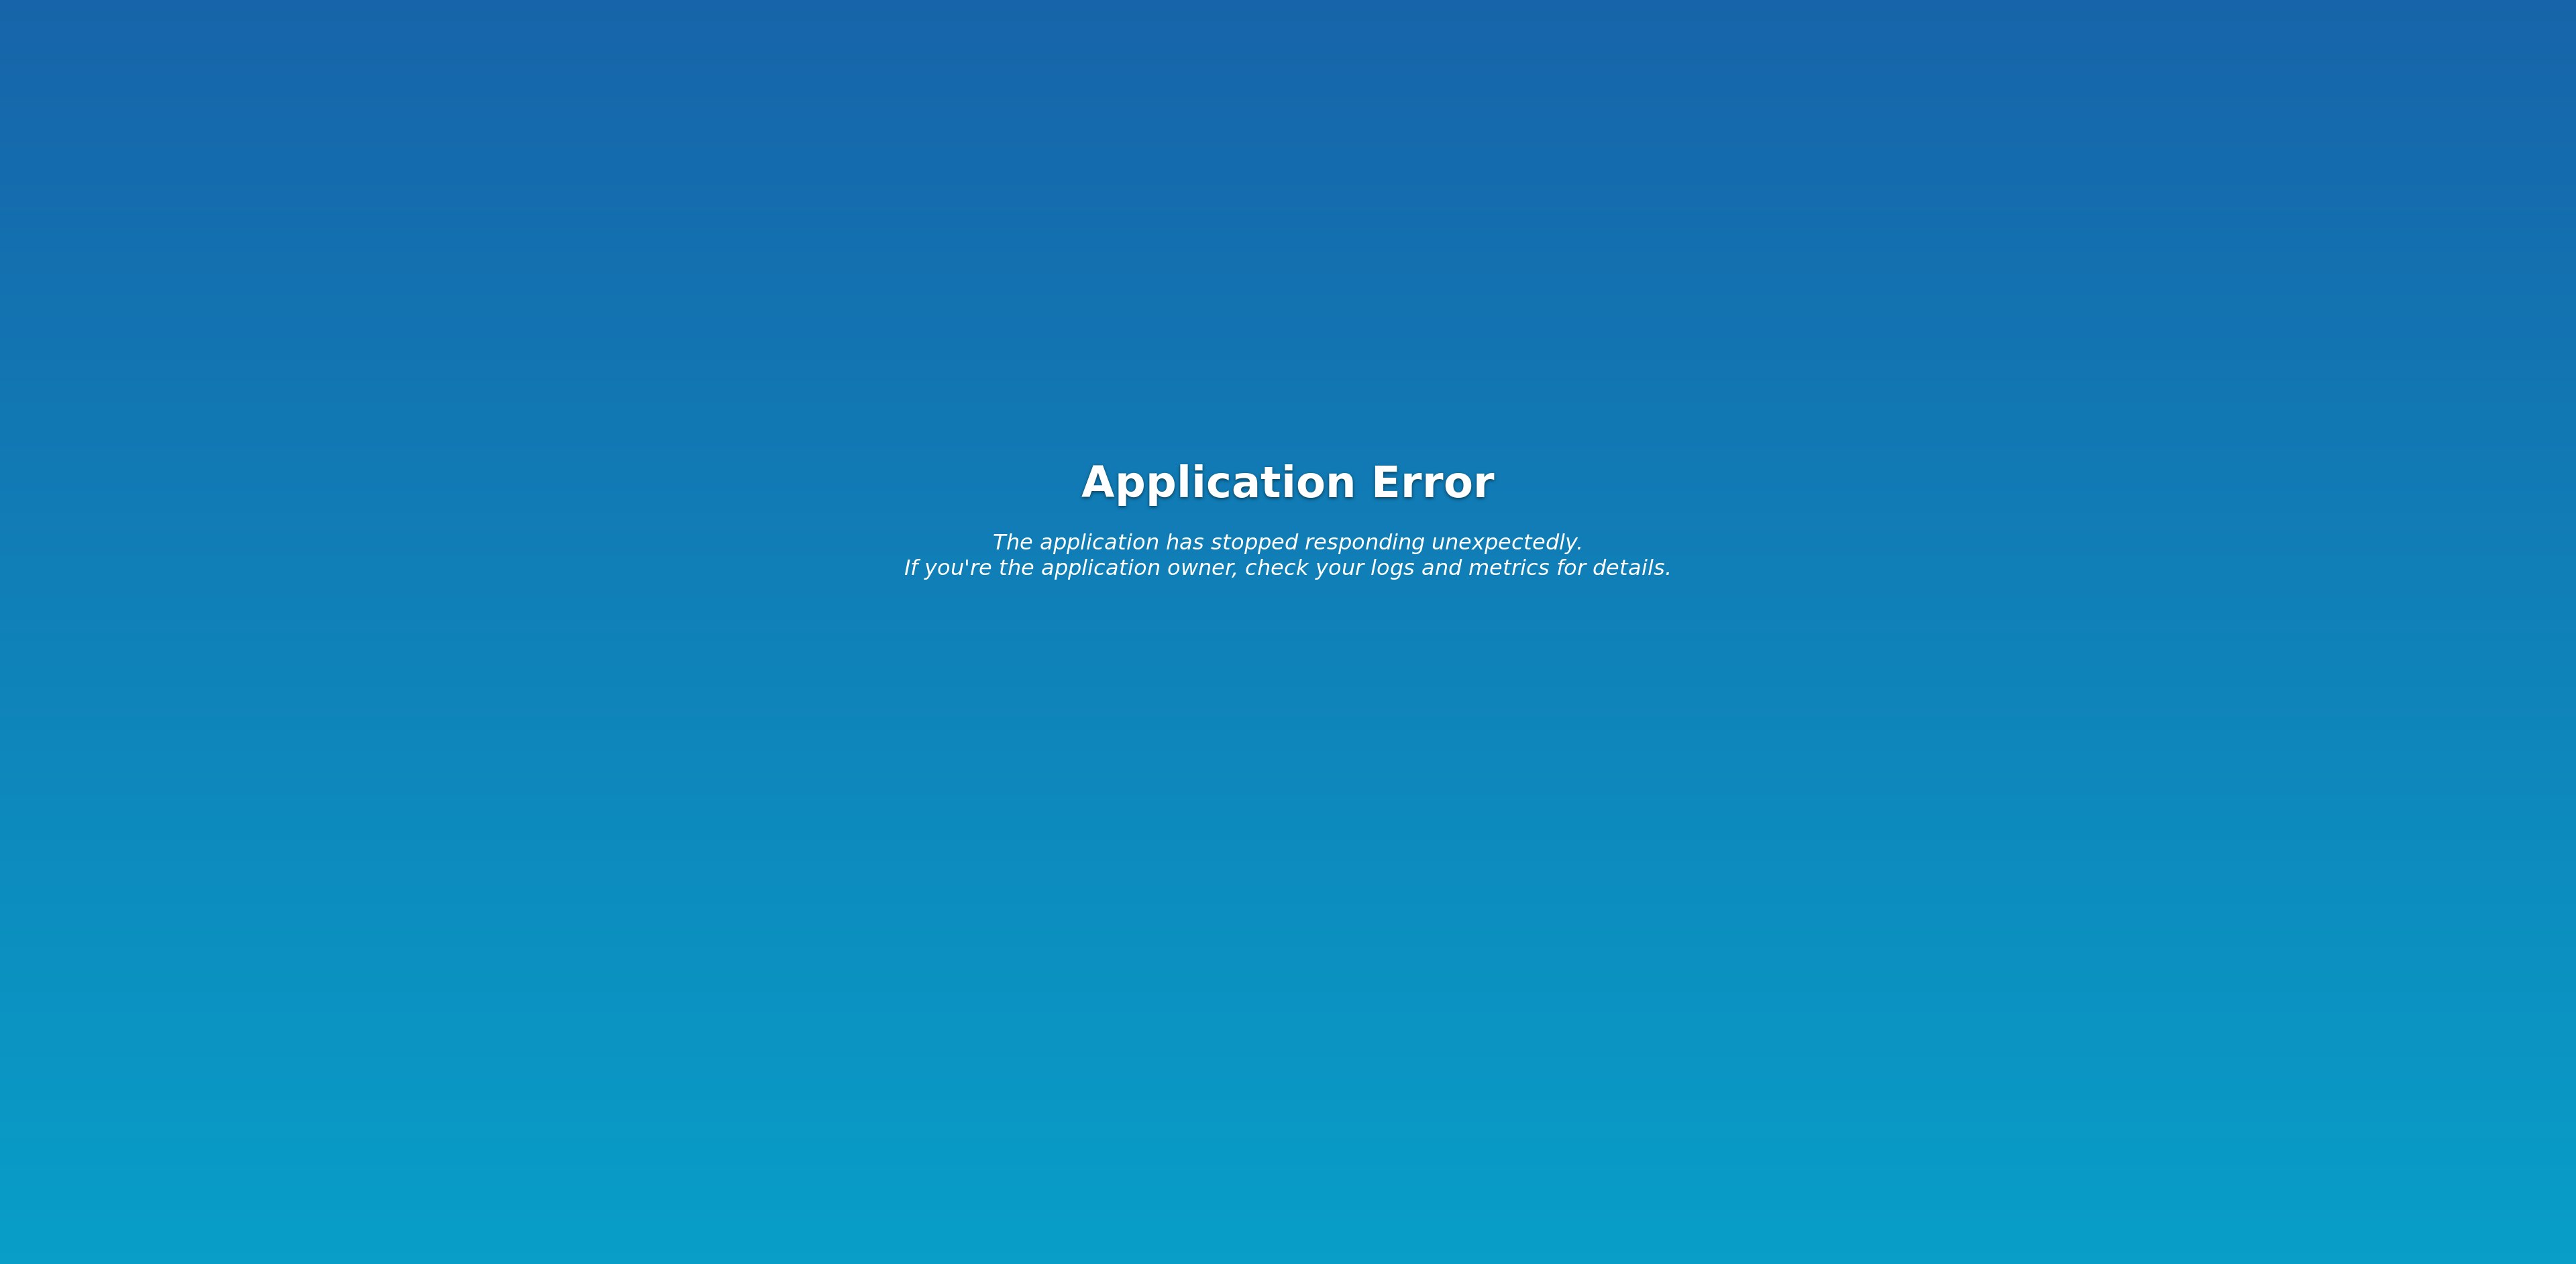 Scalingo default application error page